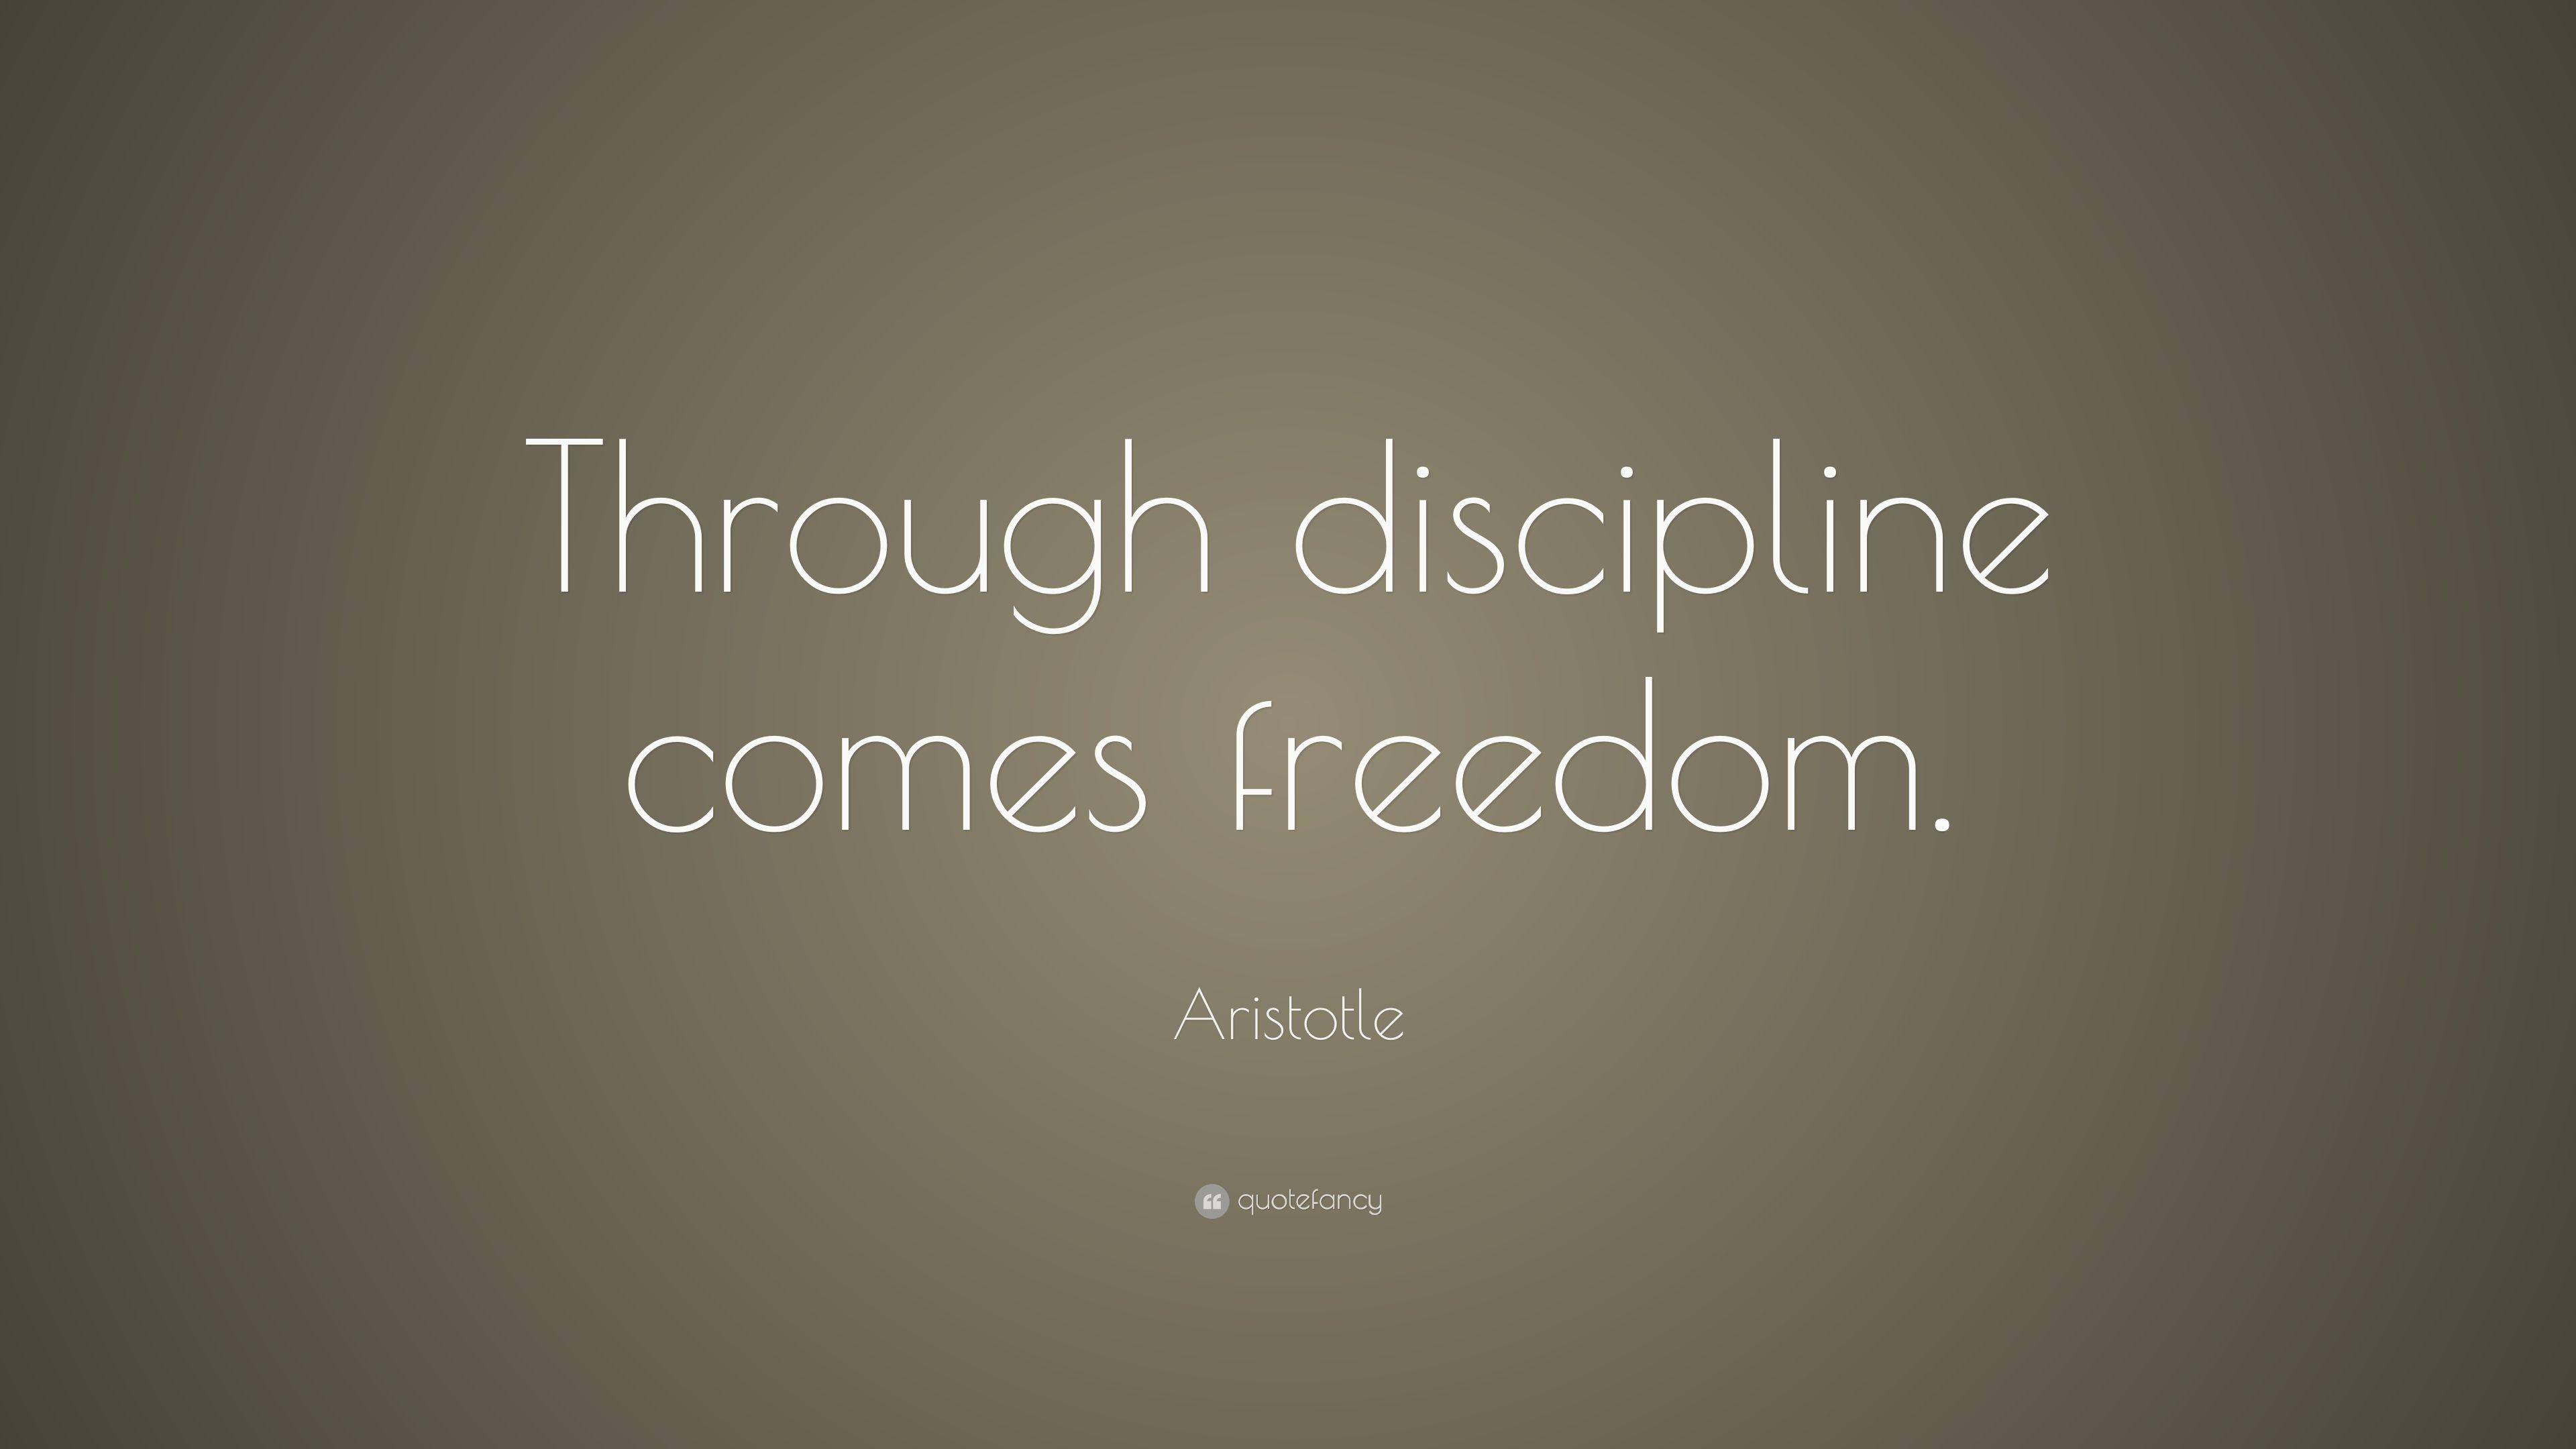 Aristotle Quote: “Through discipline comes freedom.” 33 wallpaper